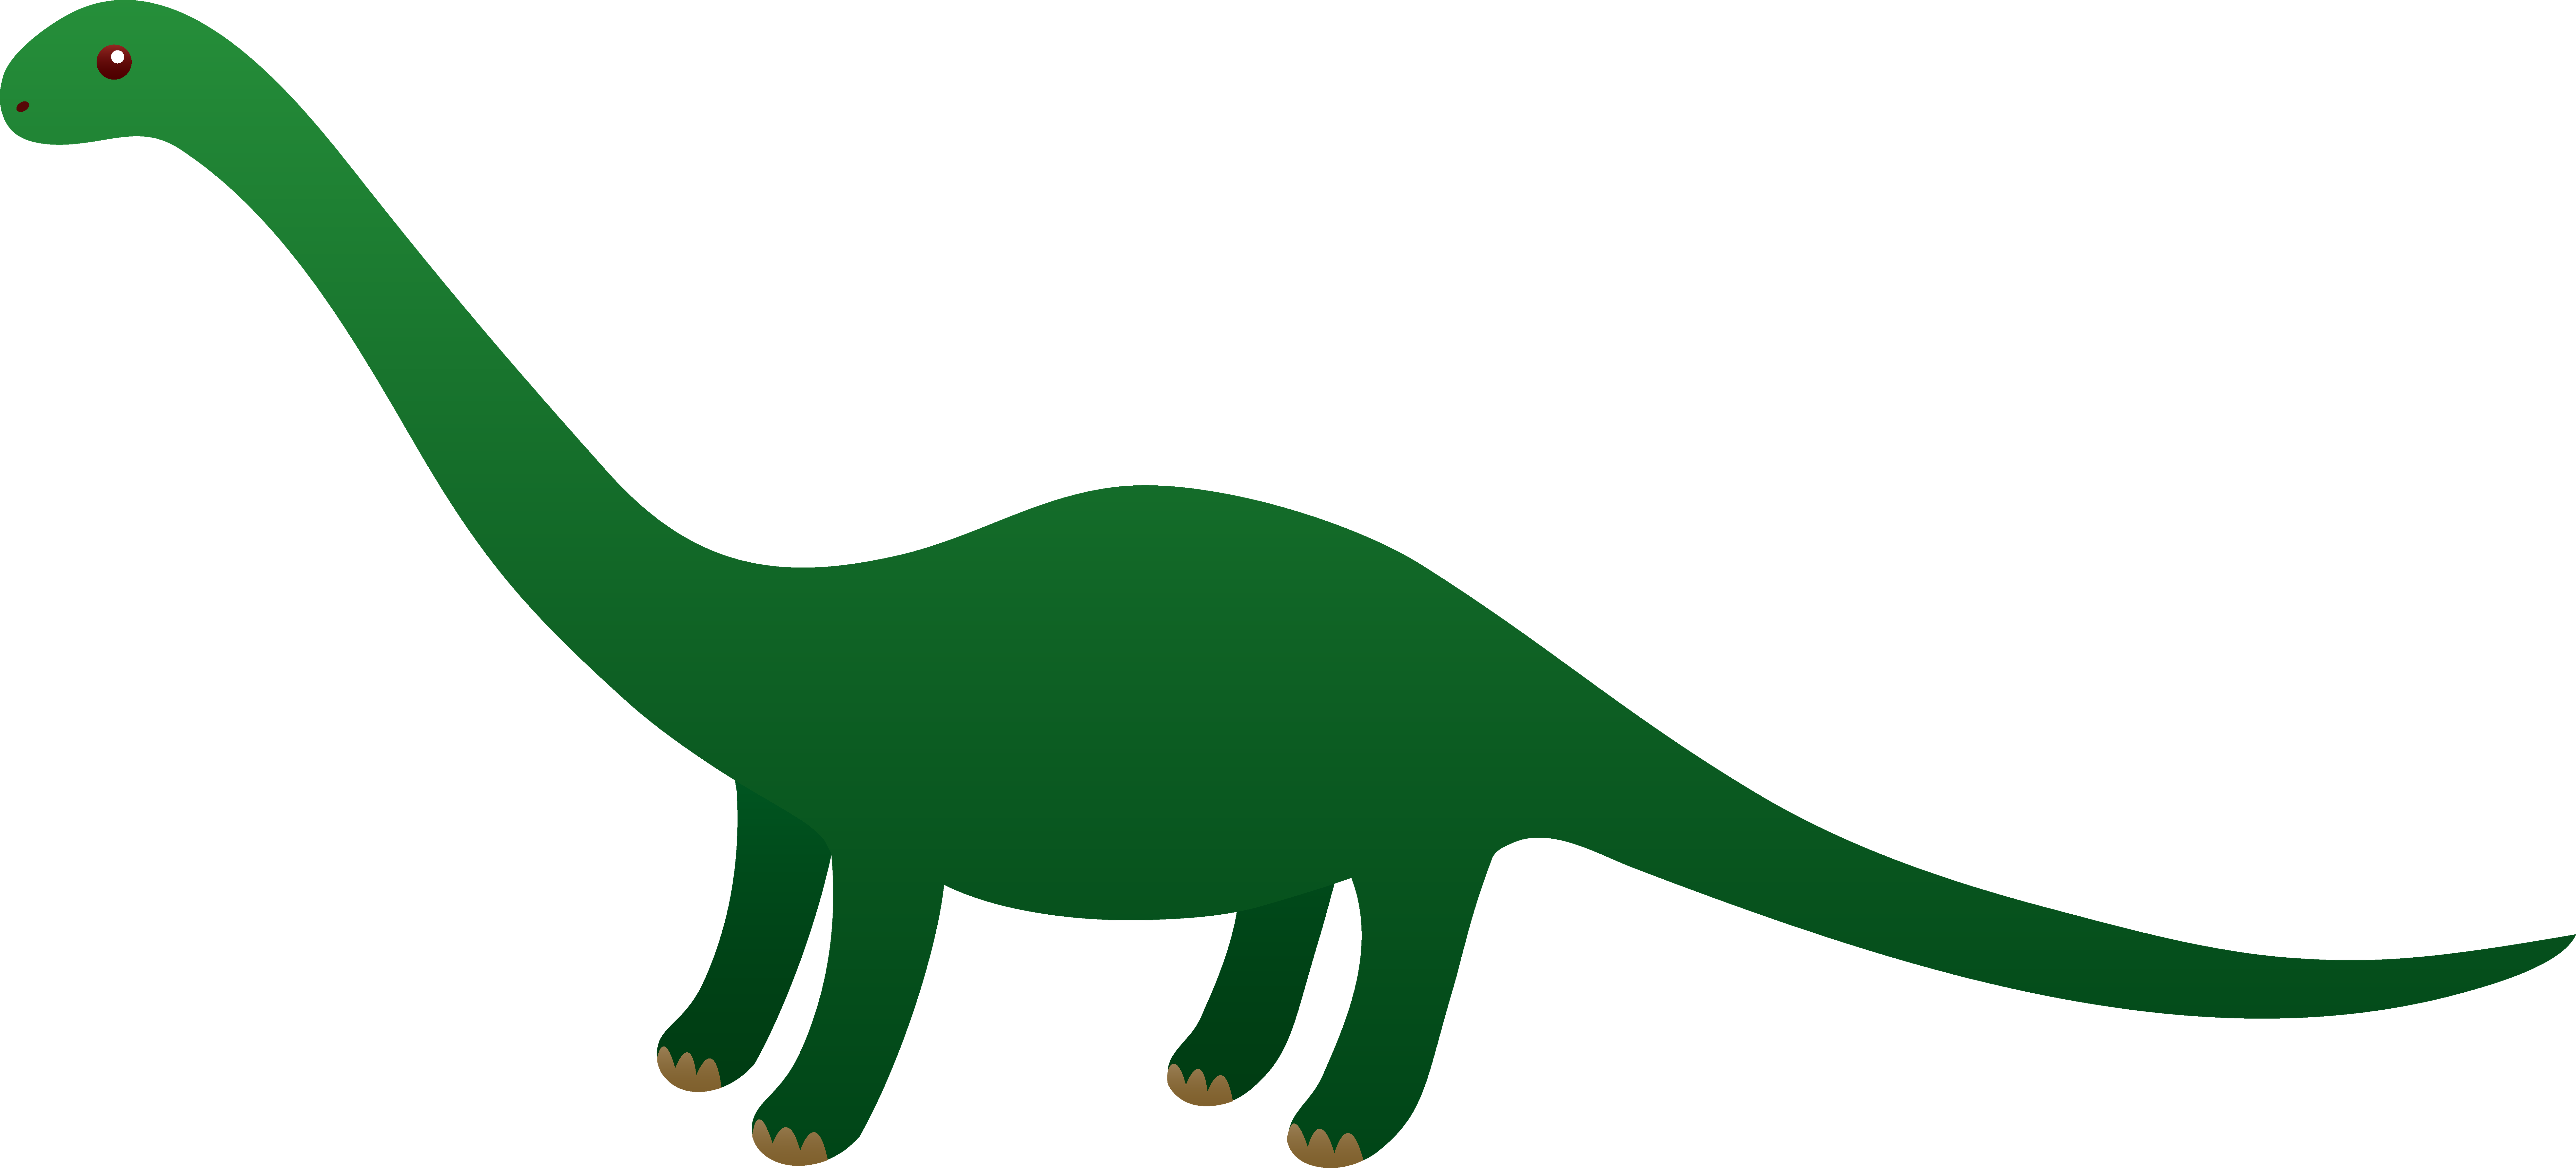 Brontosaurus or Apatosaurus Dinosaur